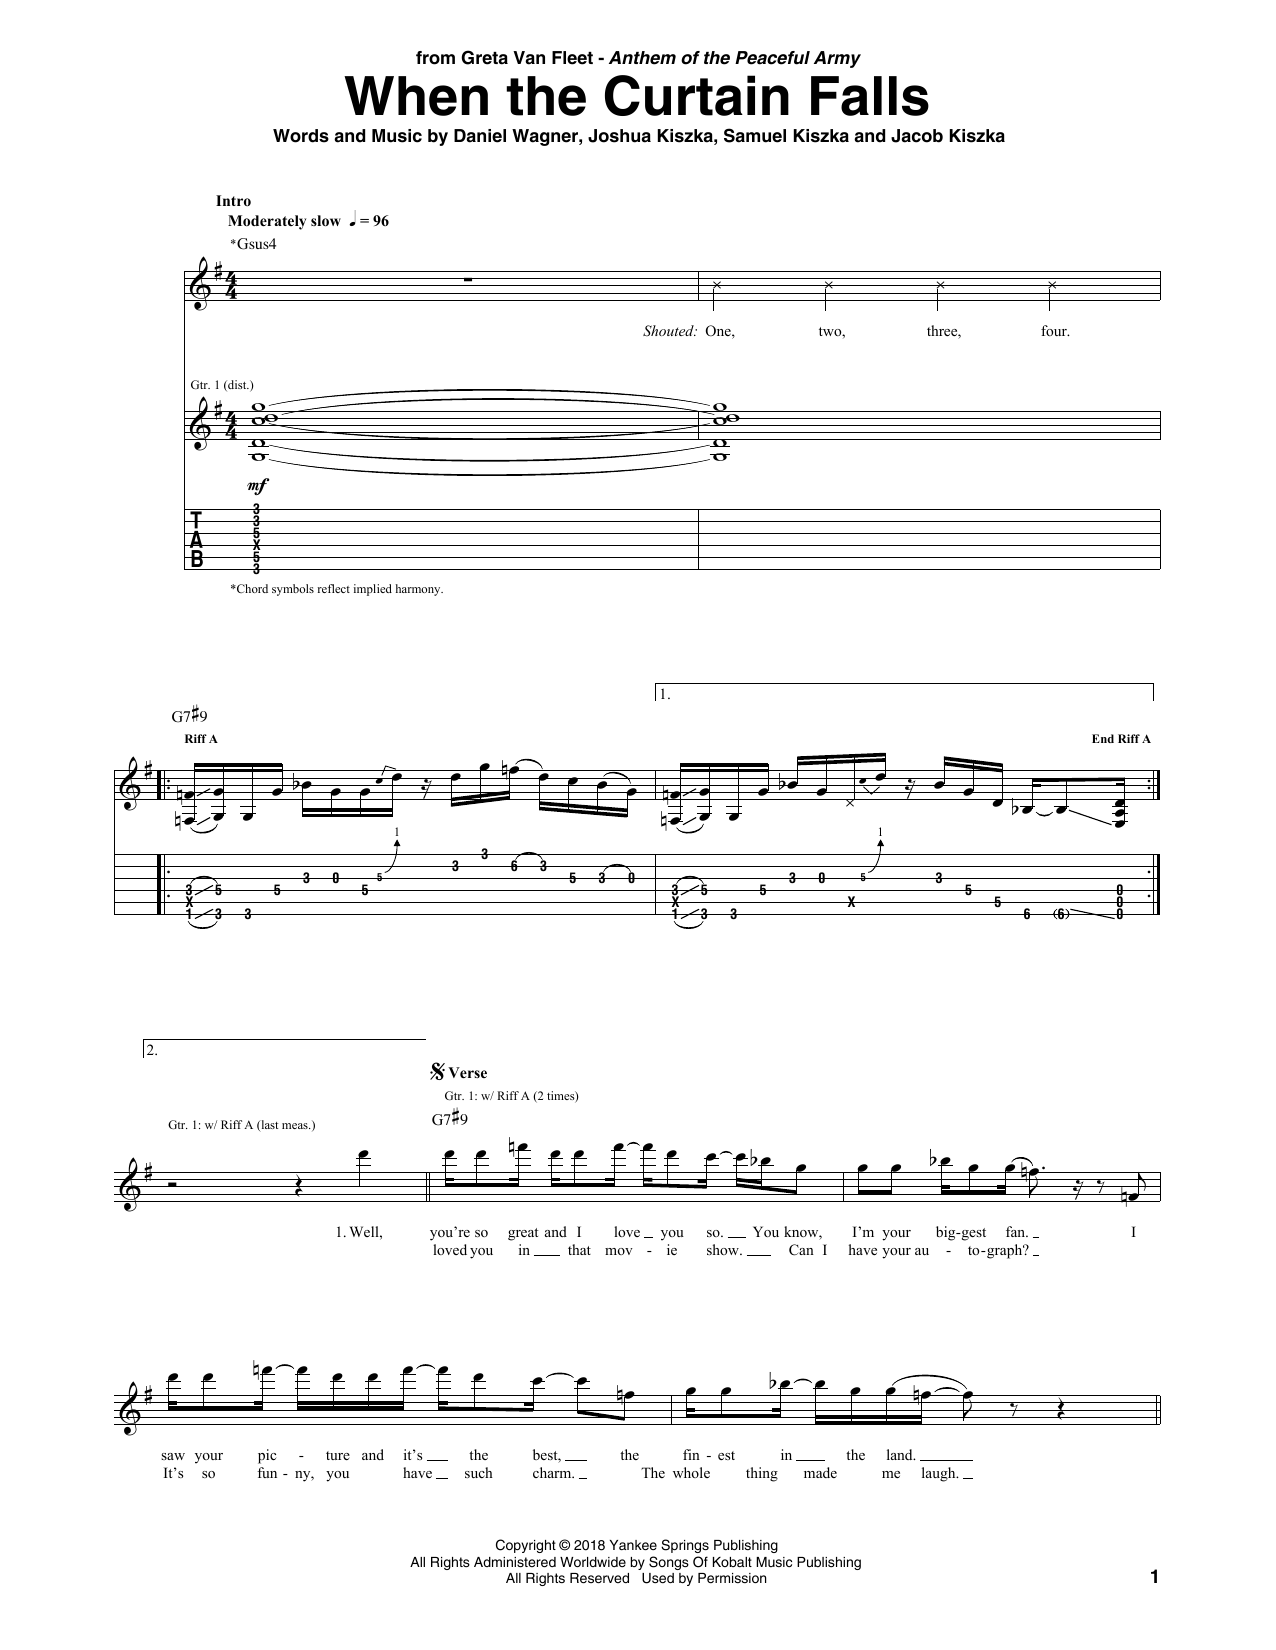 Greta Van Fleet When The Curtain Falls Sheet Music Notes & Chords for Guitar Tab - Download or Print PDF